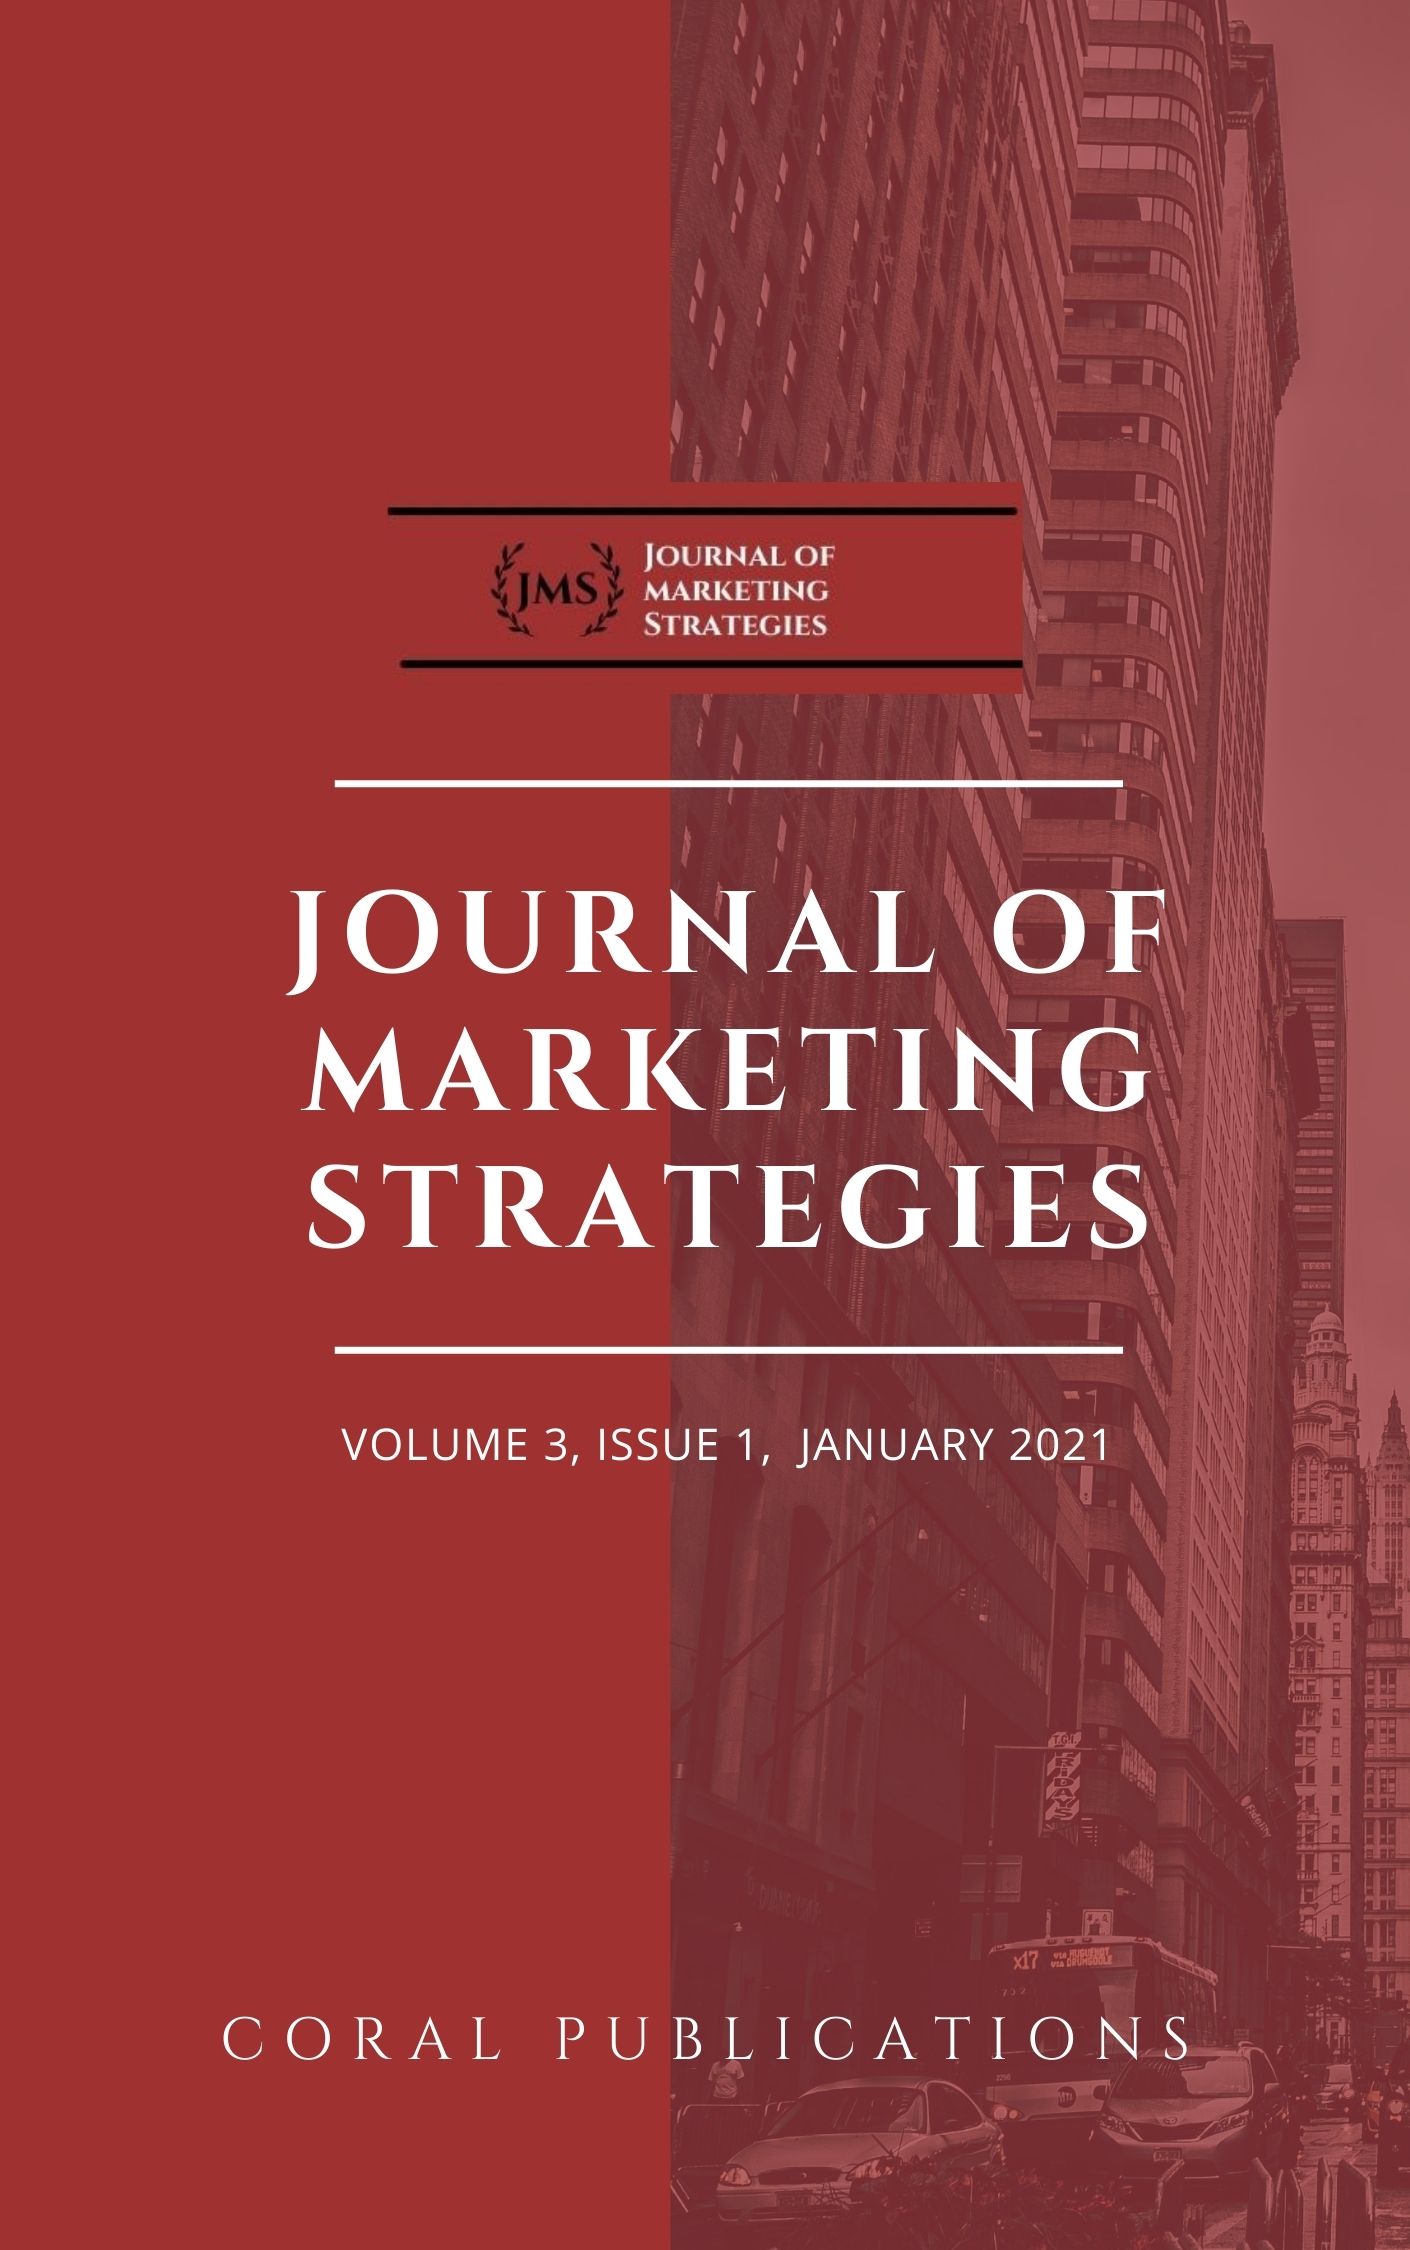 Journal of Marketing Strategies Vol. 3, Issue 1, January 2021